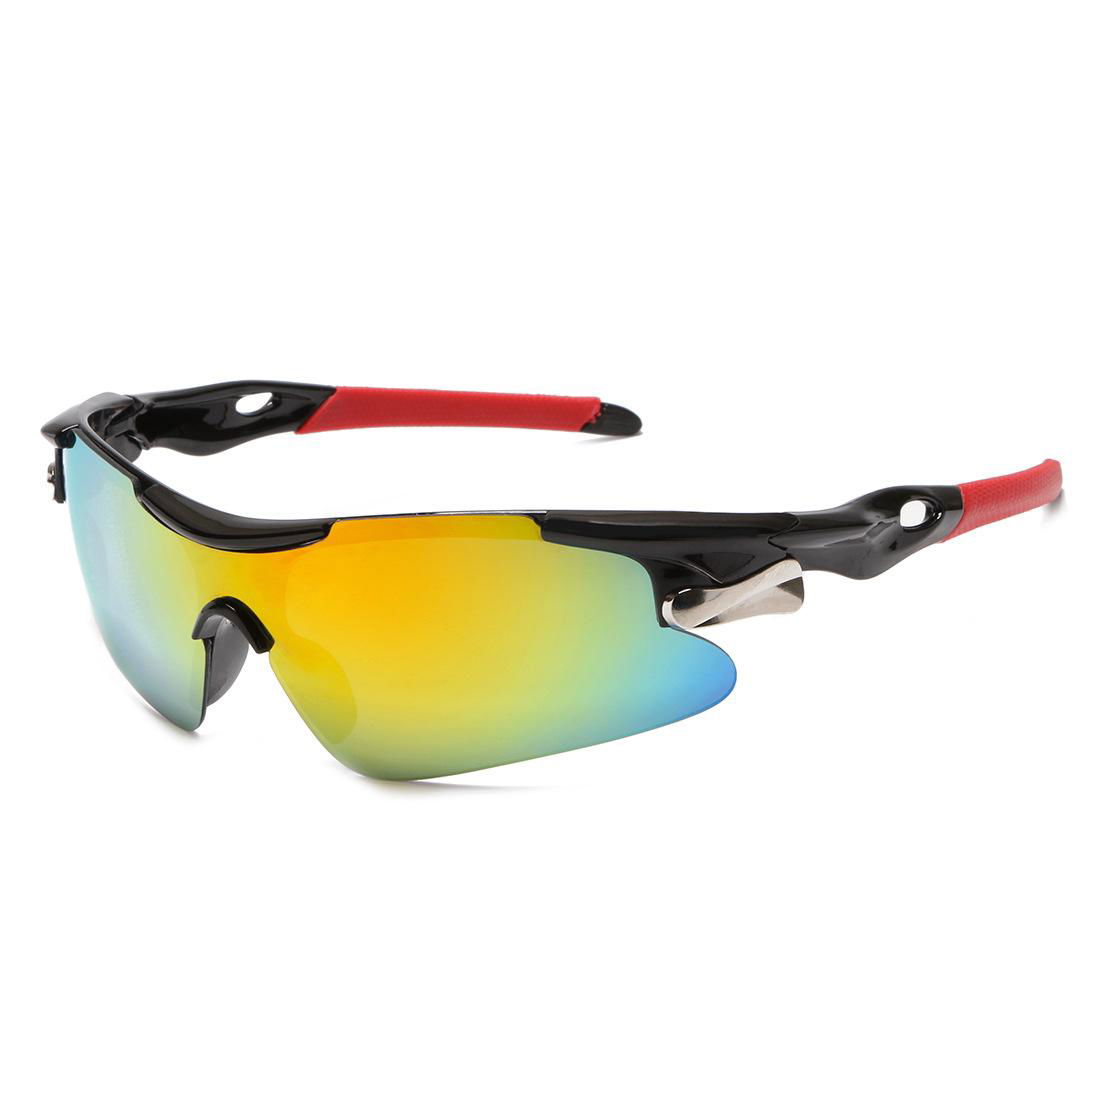 eyeglasses Glasses sunglasses eyewear for skiing 2